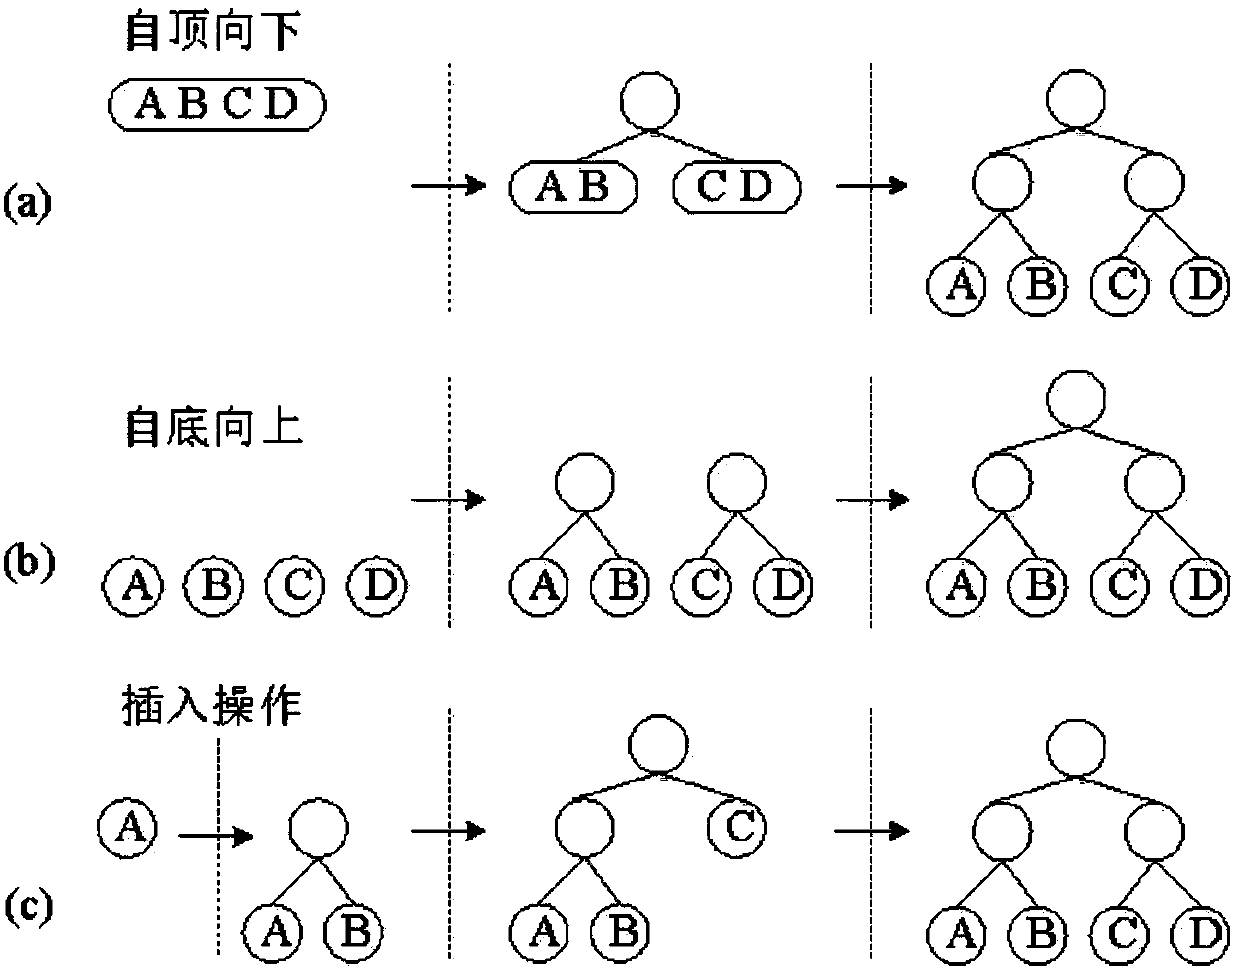 Hierarchical bounding box tree construction method on the basis of linked list sorting balanced binary tree